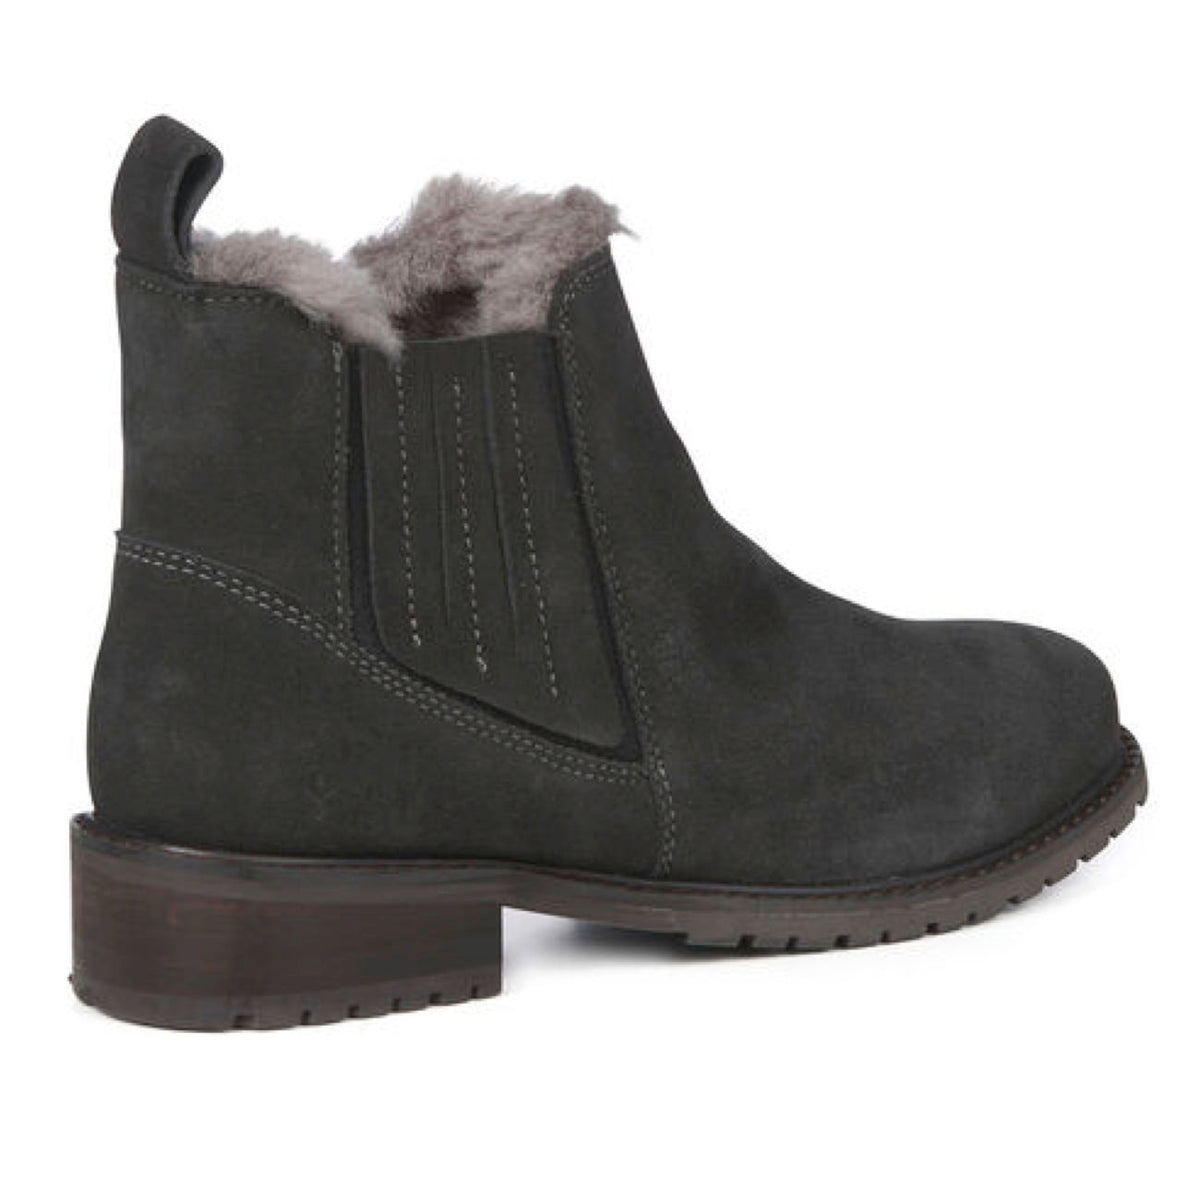 EMU Australia, Moira, Waterproof Suede Leather, Boot, Dark Grey